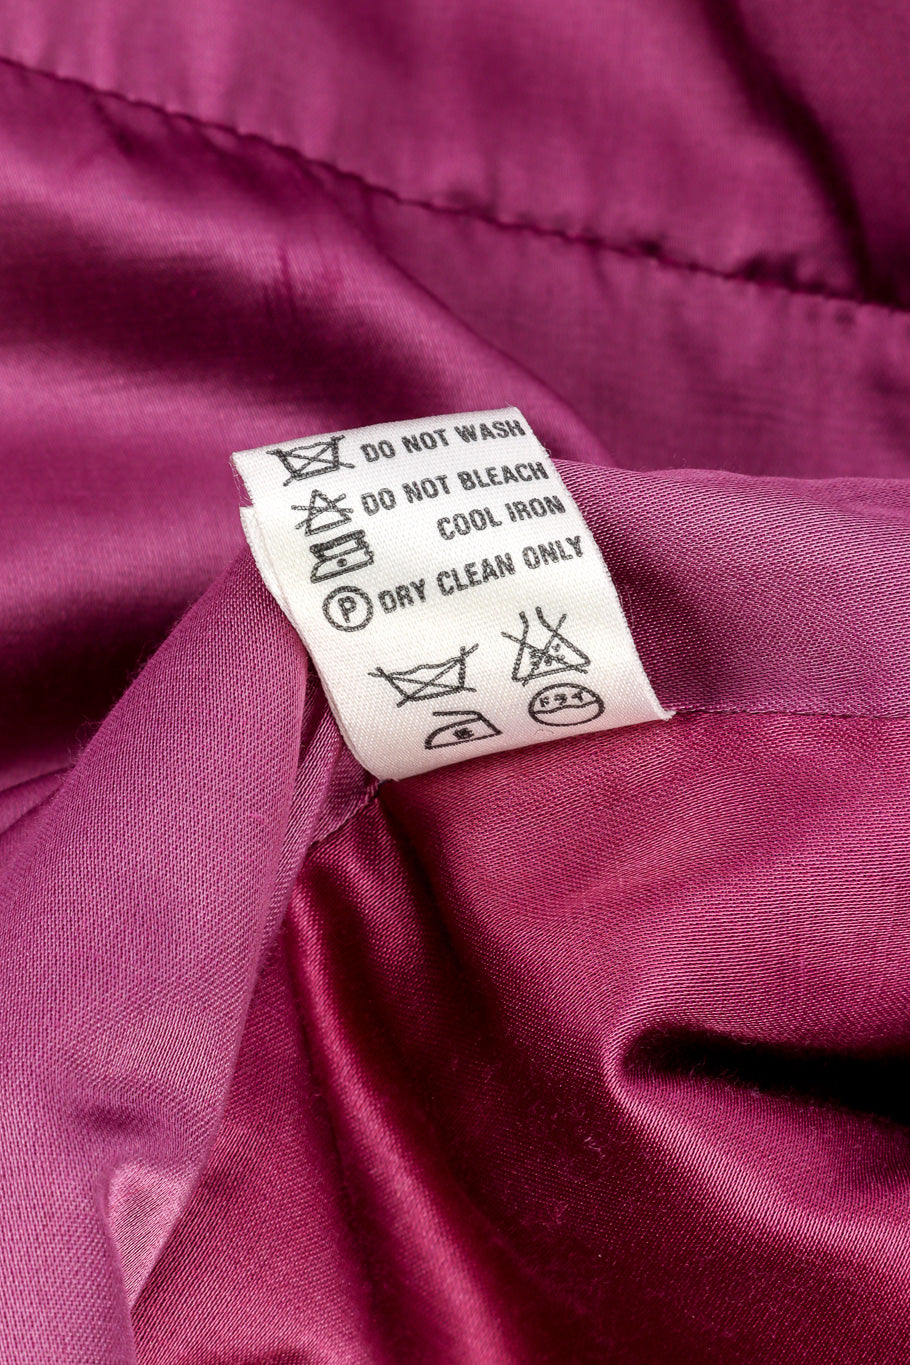 Oversized Mohair Cardigan by Escada fabric tag @recessla